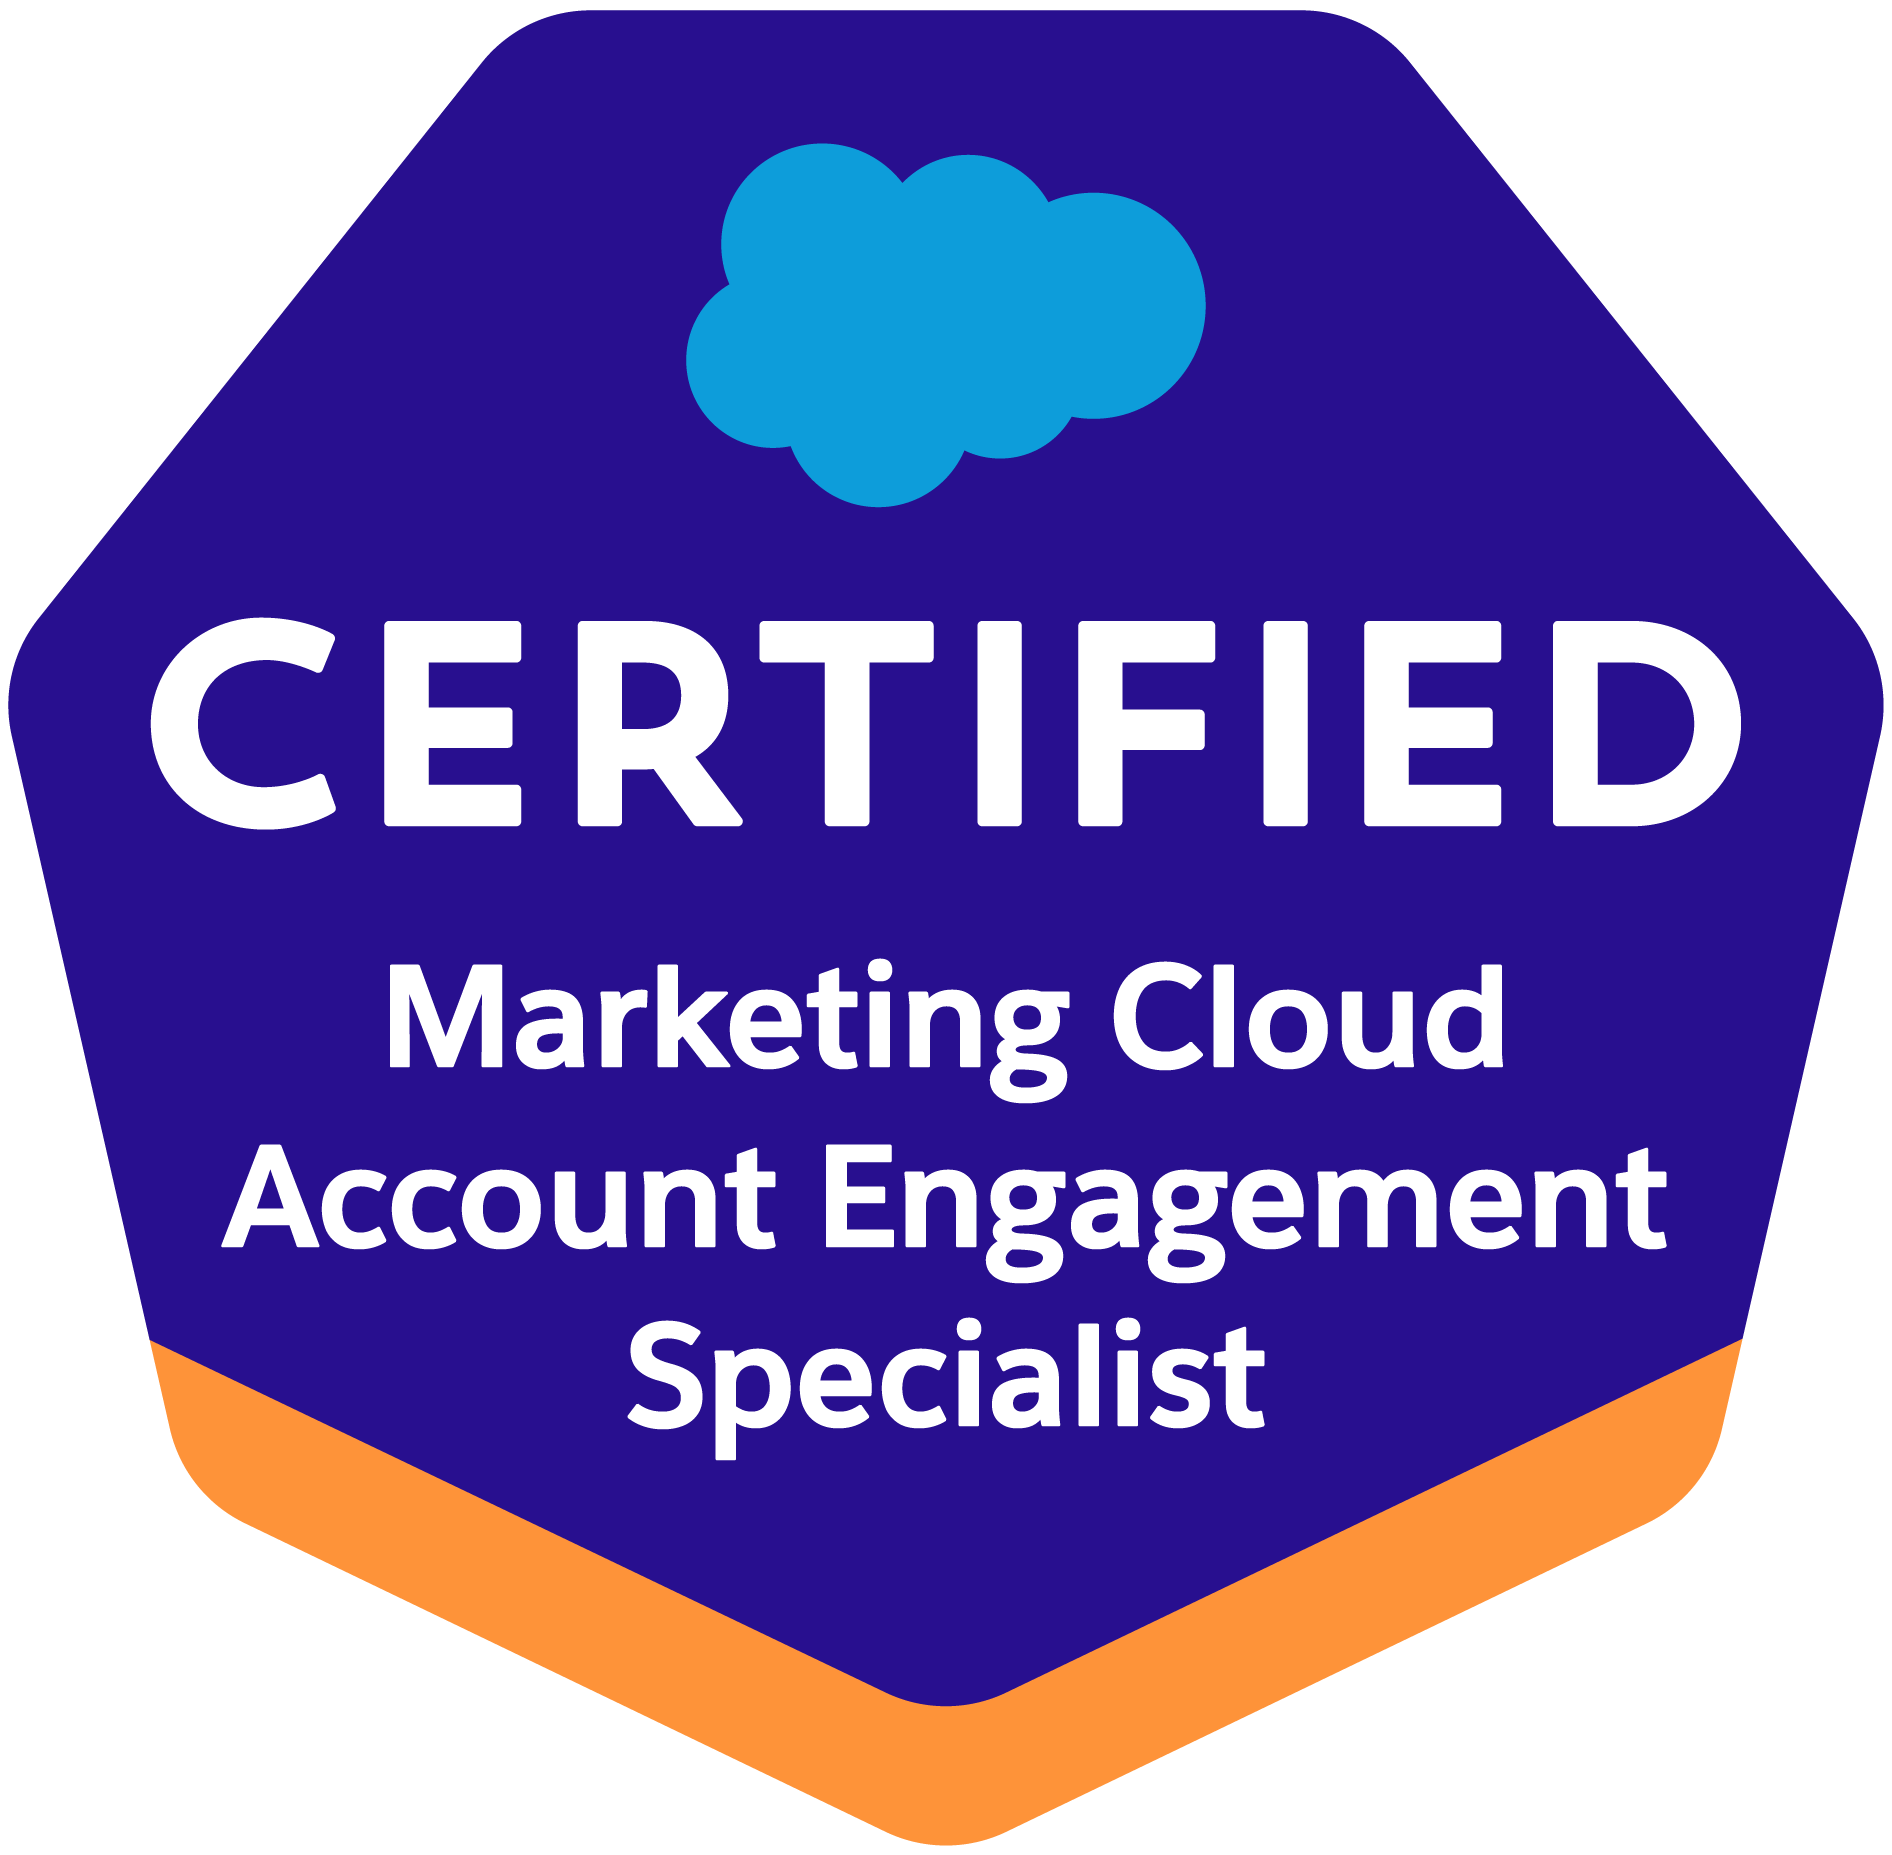 Logo Service-Cloud-Consultant